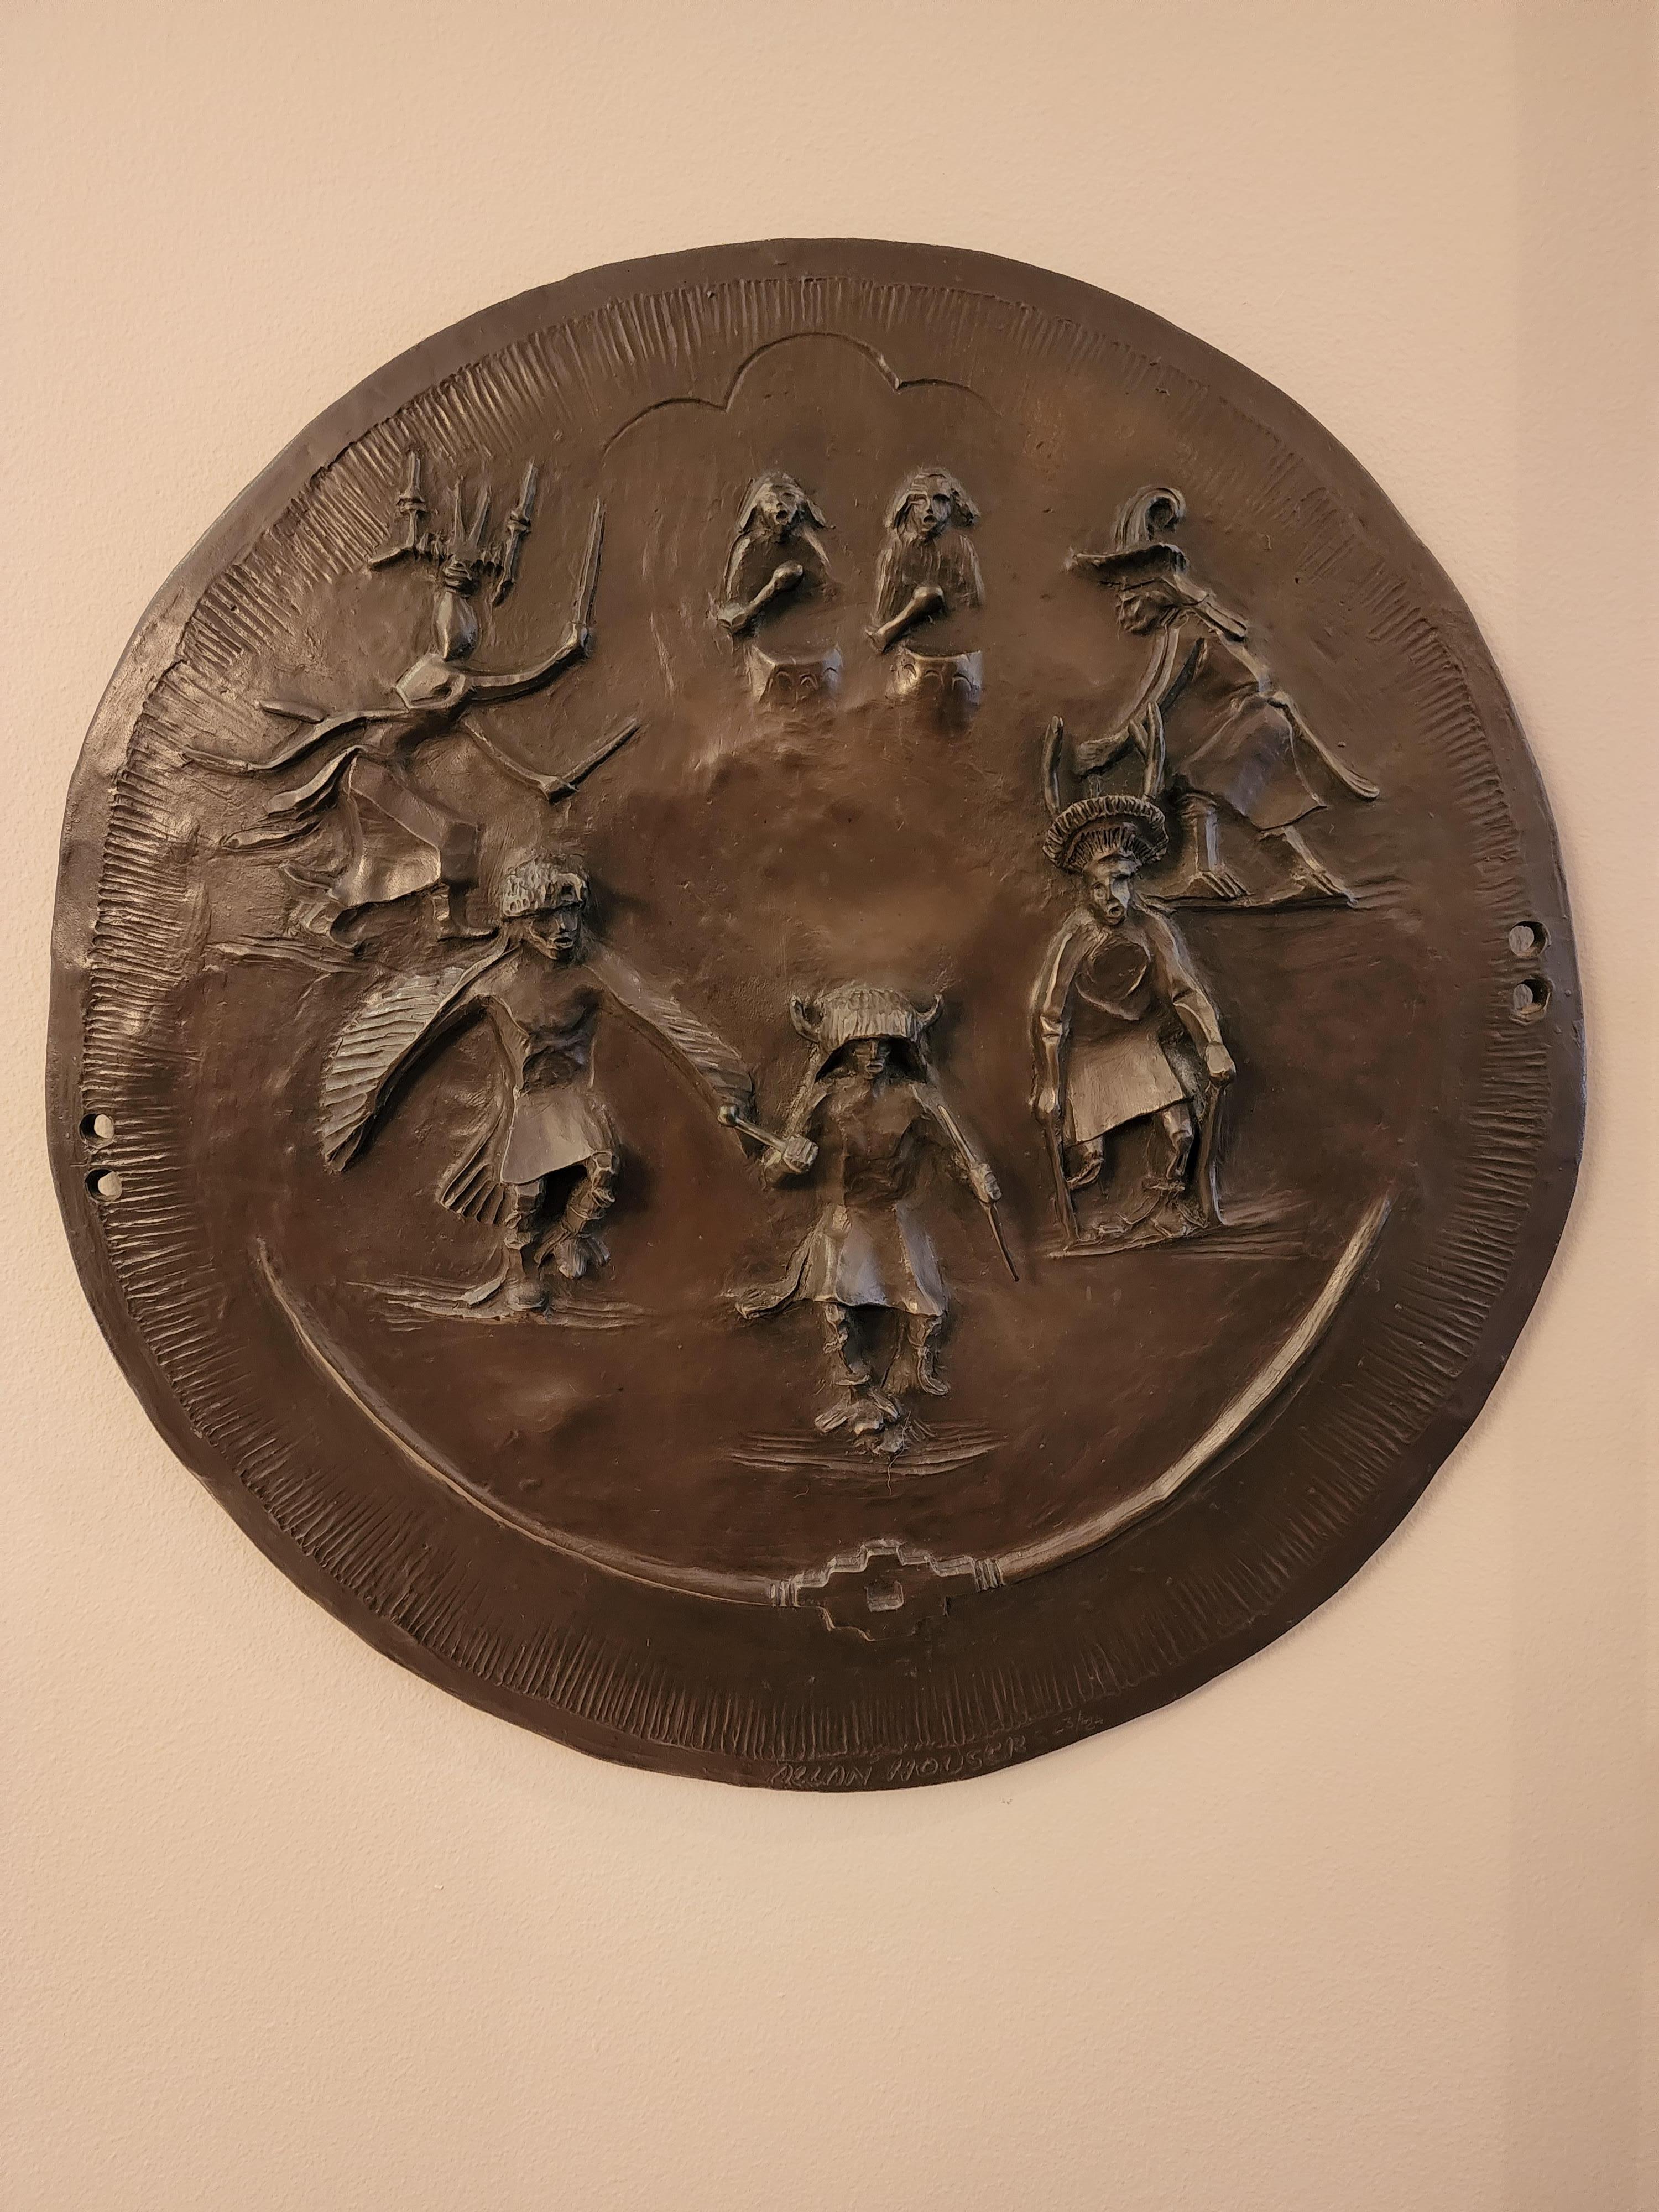 Southwest Dance Shield, Allan Houser, relief, bronze, Contemporary Native art